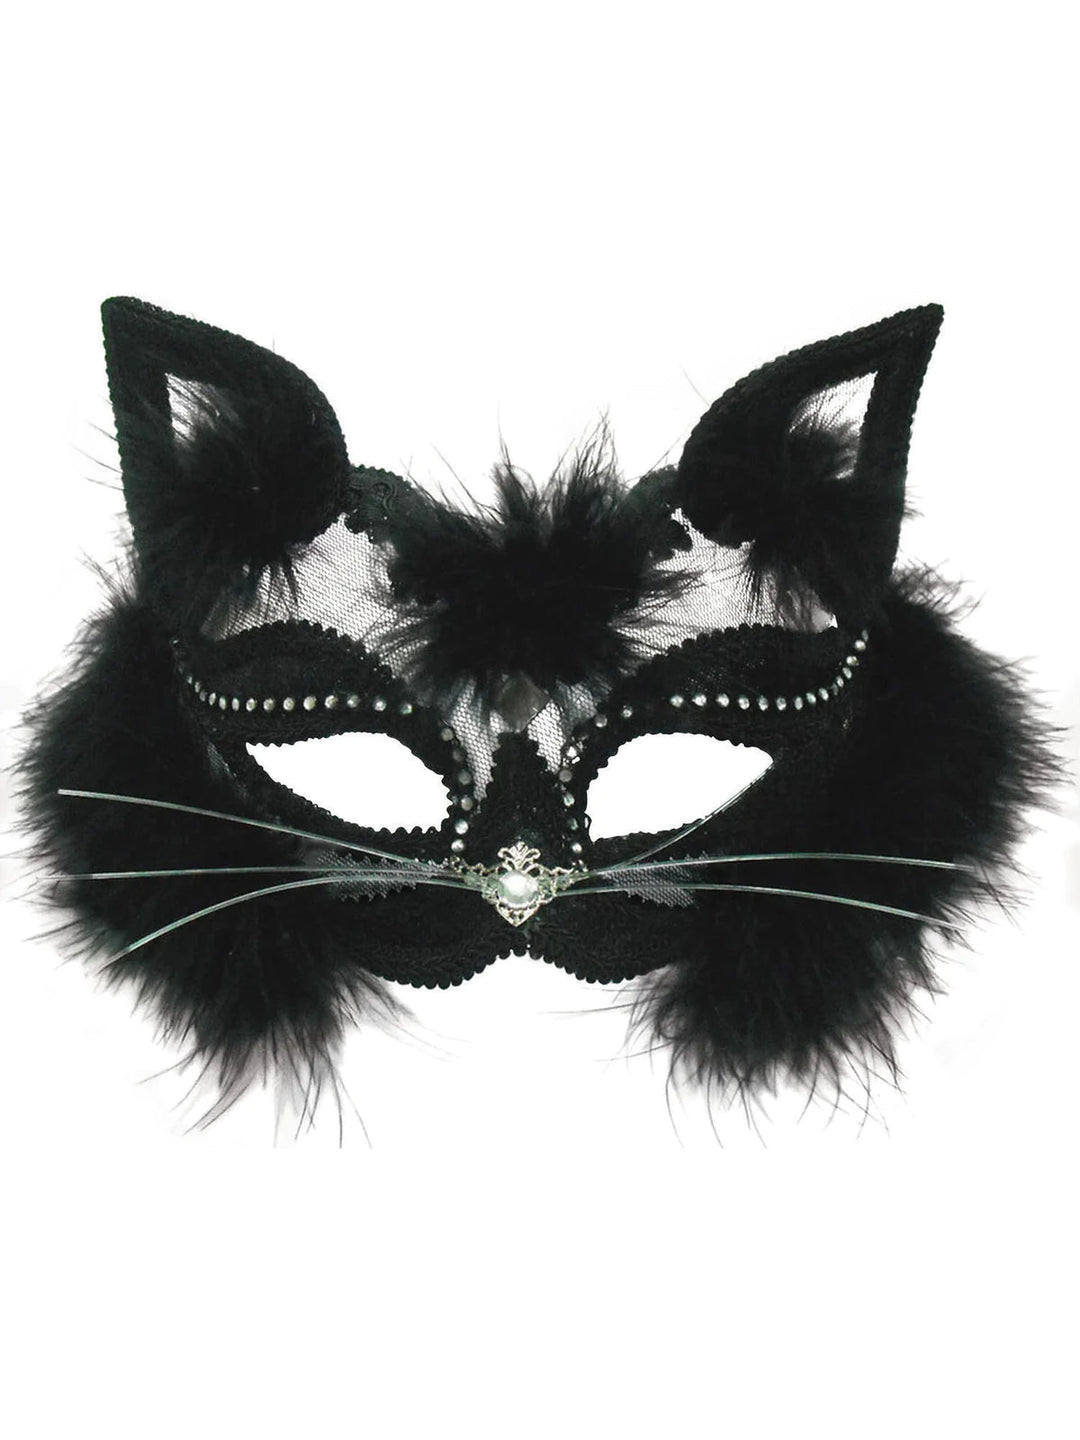 Transparent Black Cat Mask with Fur